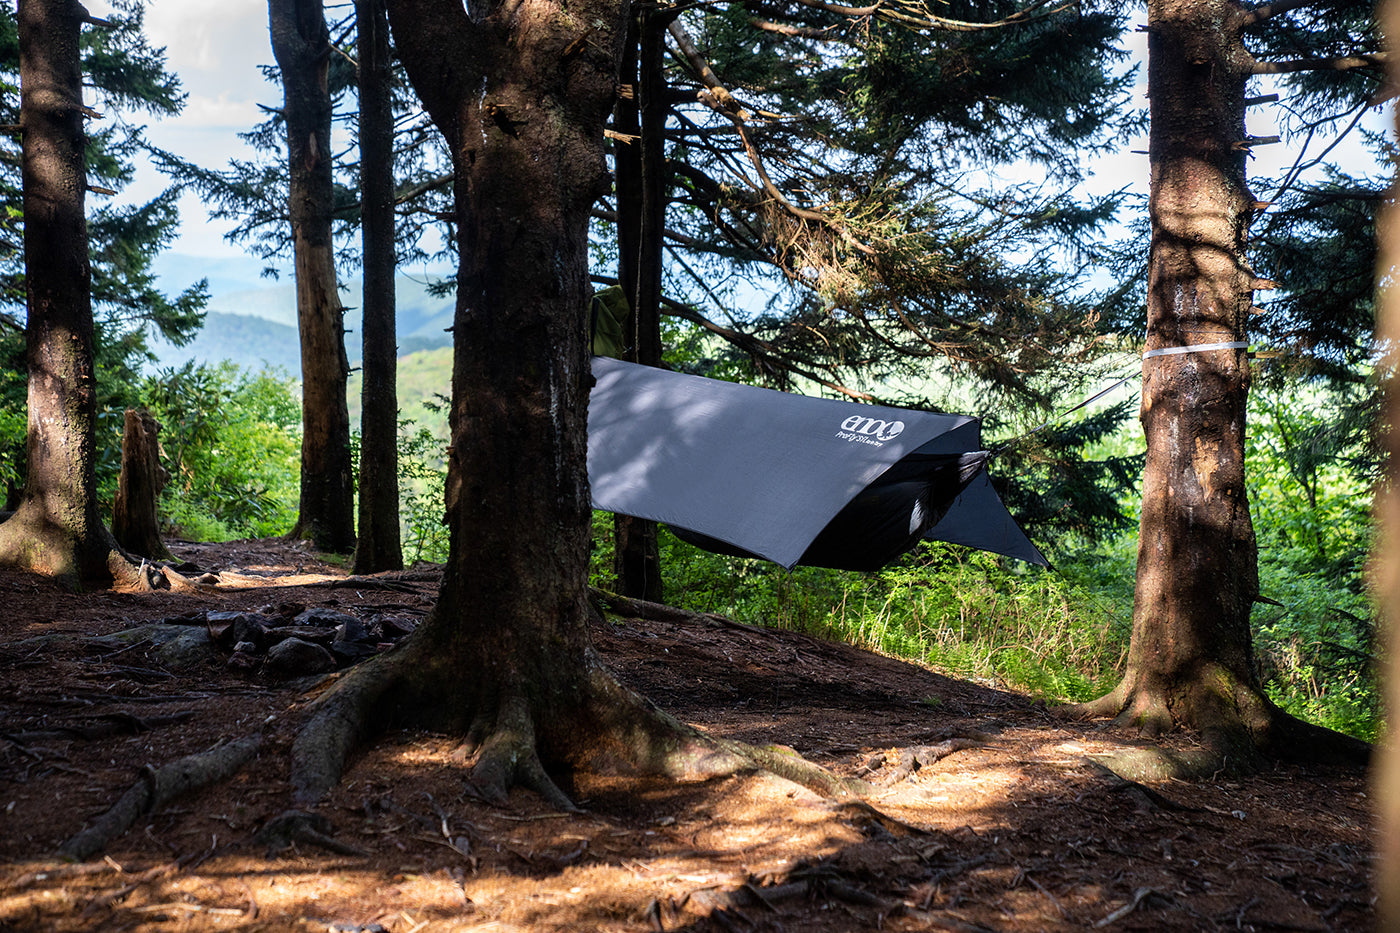 A hammock camping setup overlooks the blue ridge mountains.